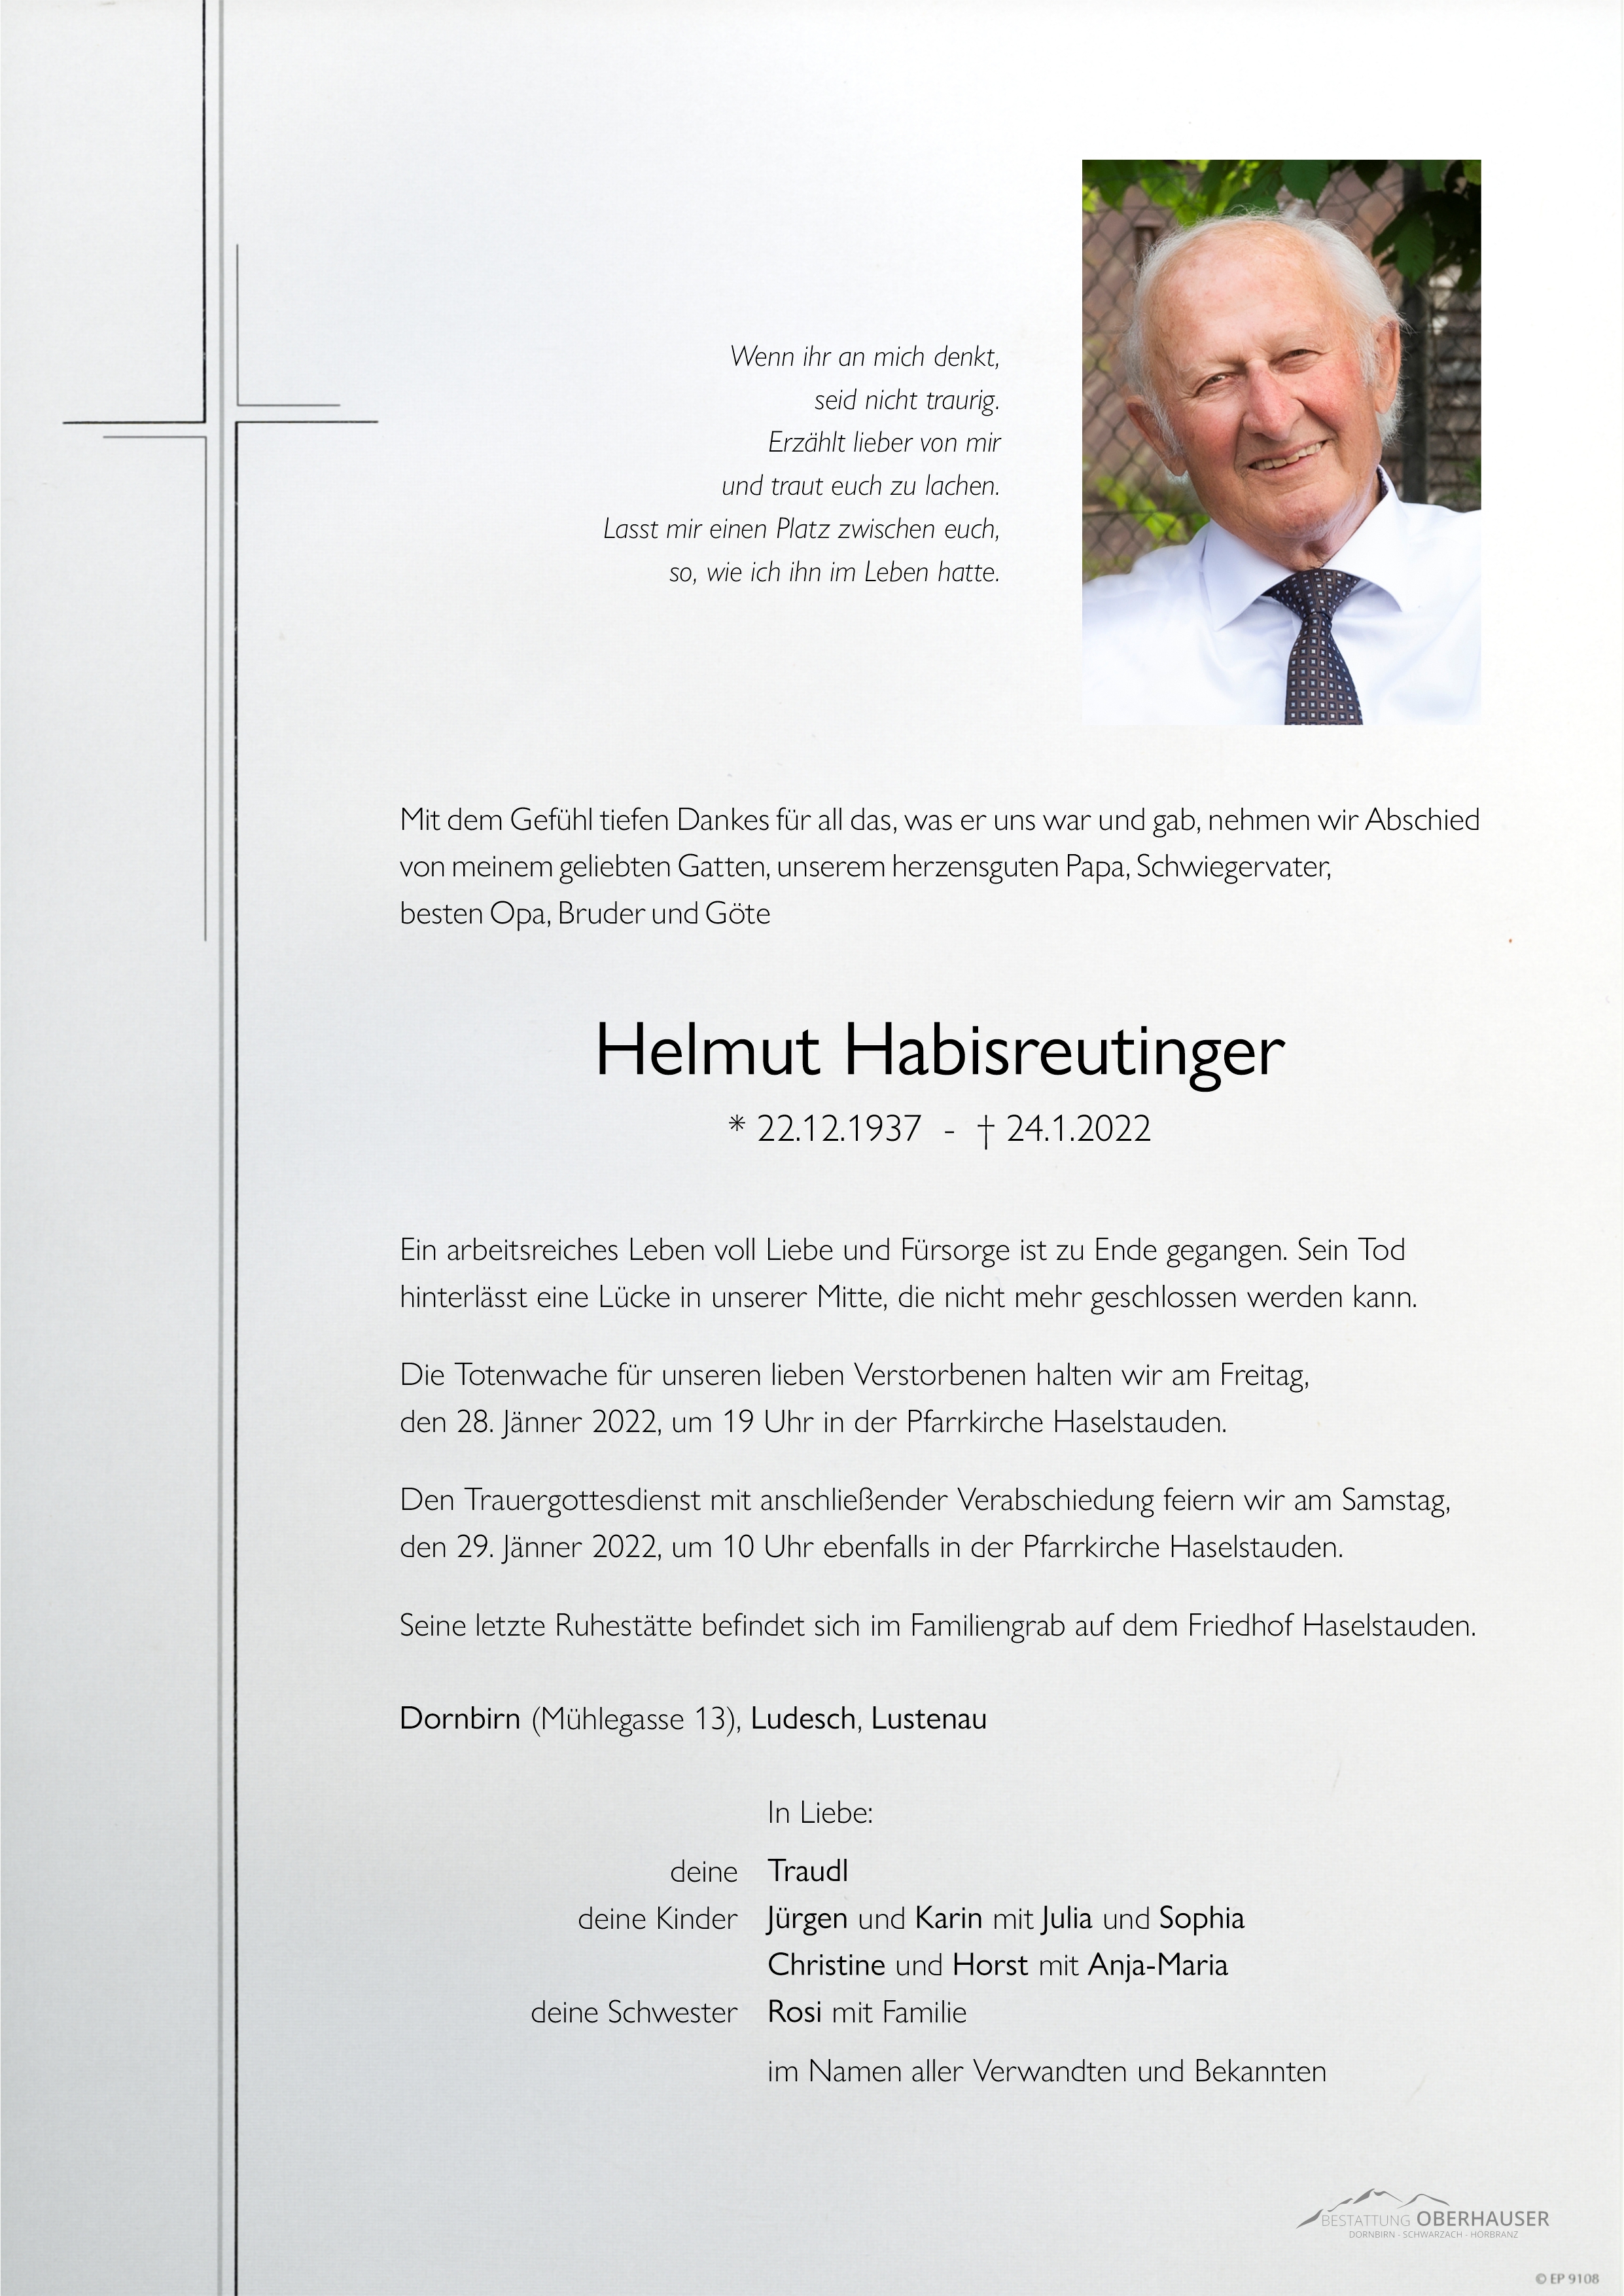 Helmut Habisreutinger